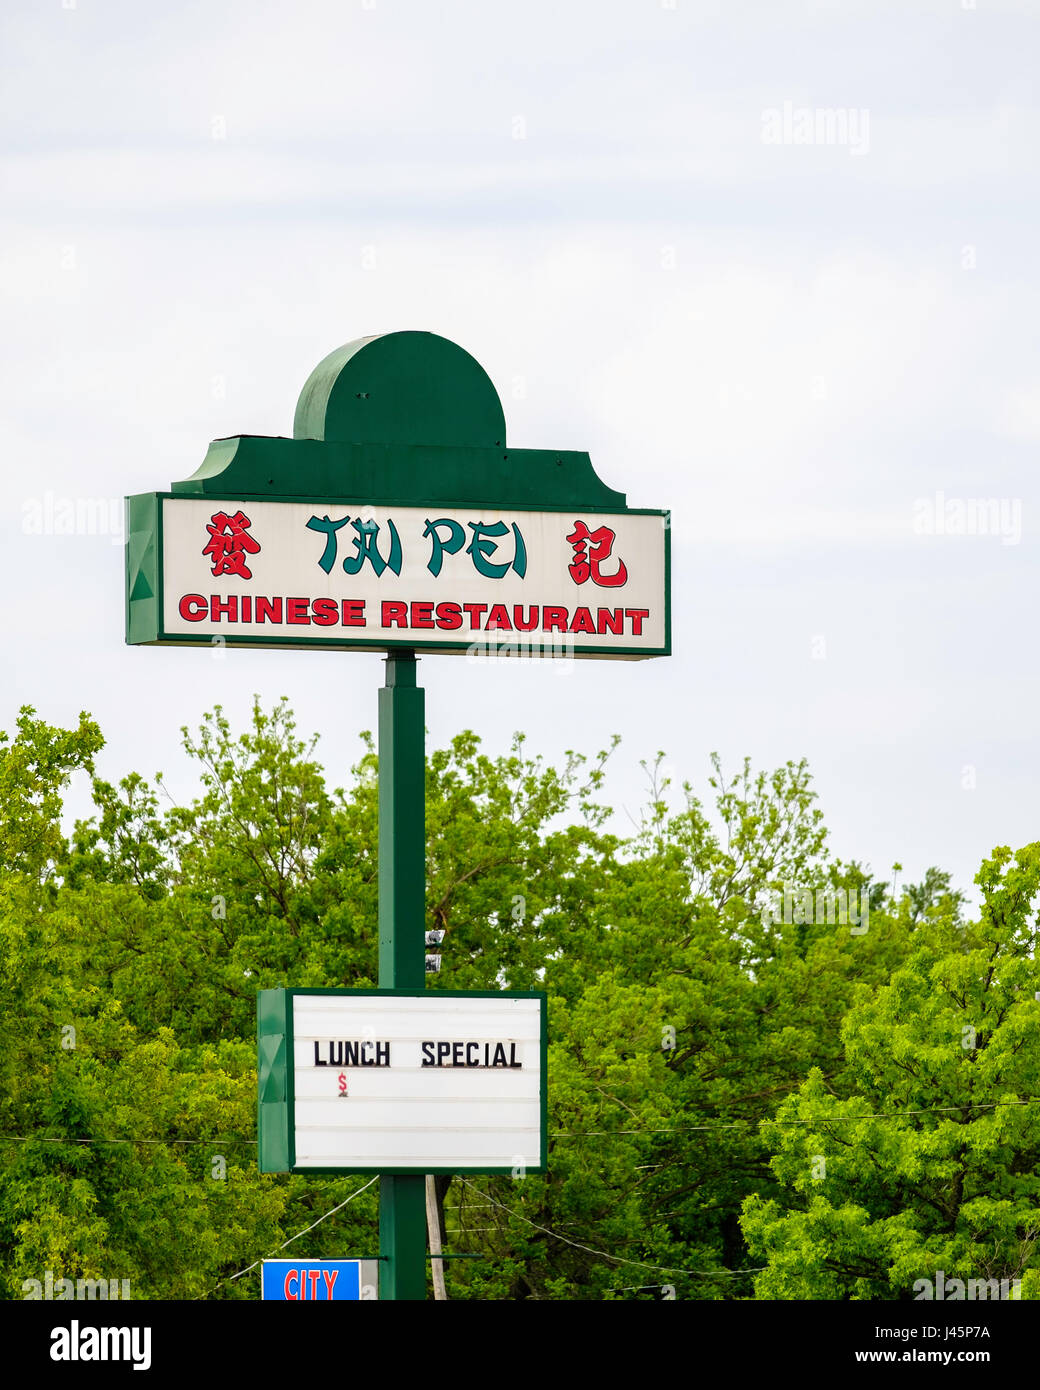 Un polo publicidad signo de Tai Pei, un restaurante chino ubicado en North Macarthur Blvd. En Oklahoma City, Oklahoma, Estados Unidos. Foto de stock